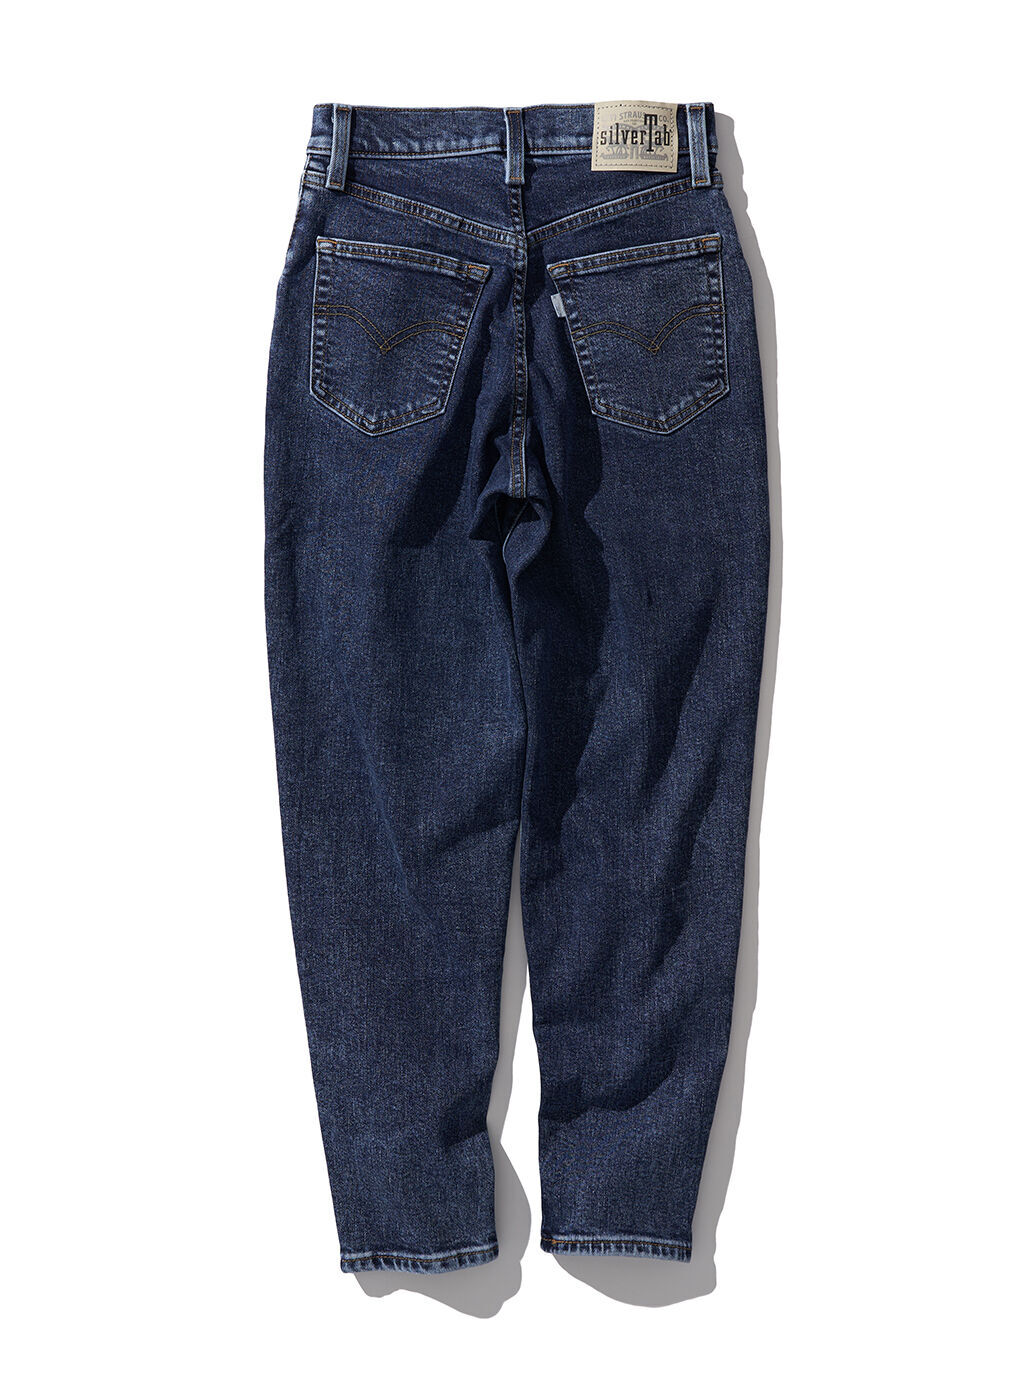 discount 83% KIDS FASHION Trousers Jean Blue 18-24M Mango jeans 